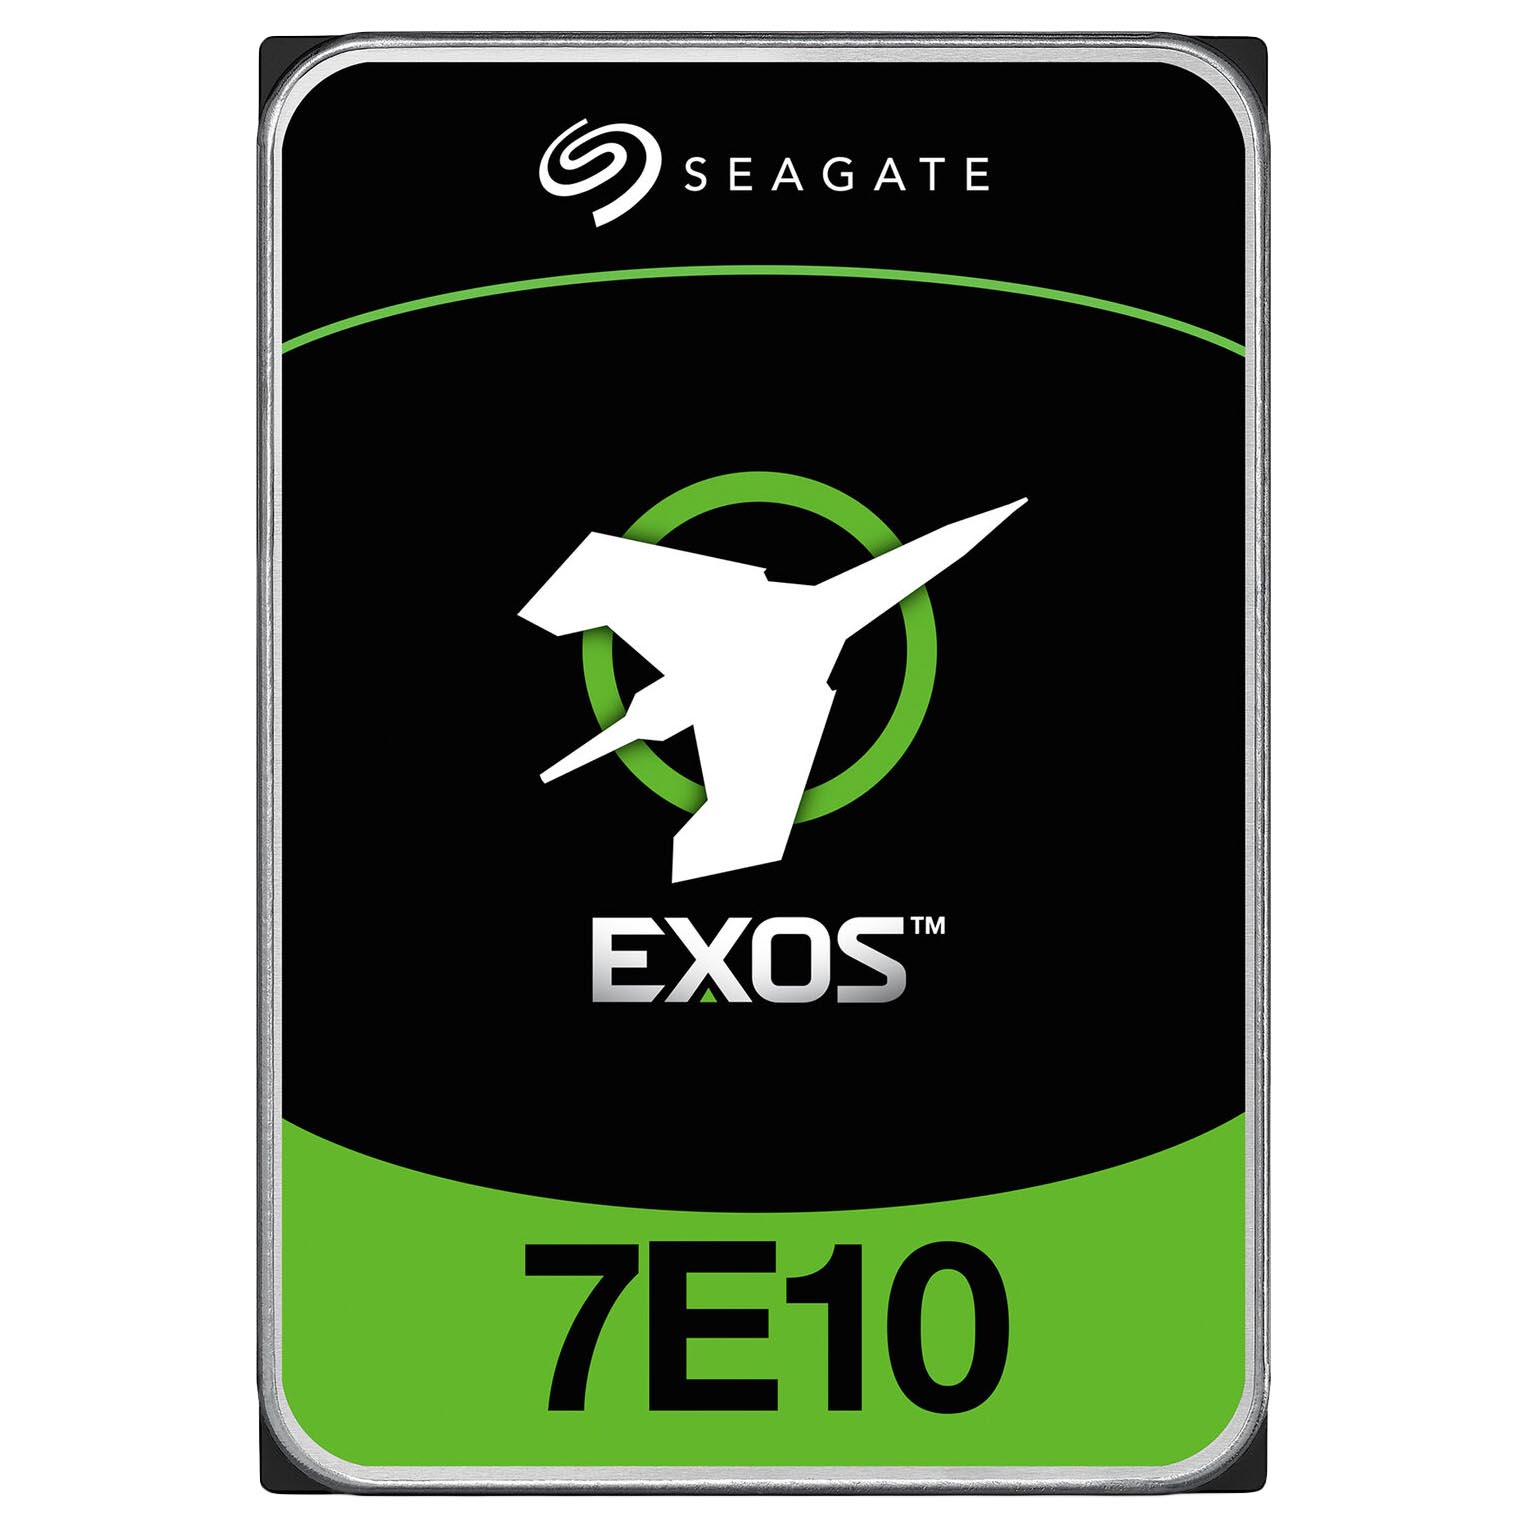 Внутренний жесткий диск Seagate Exos 7E10, ST8000NM017B, 8 Тб жесткий диск seagate exos 7e10 4тб st4000nm000b